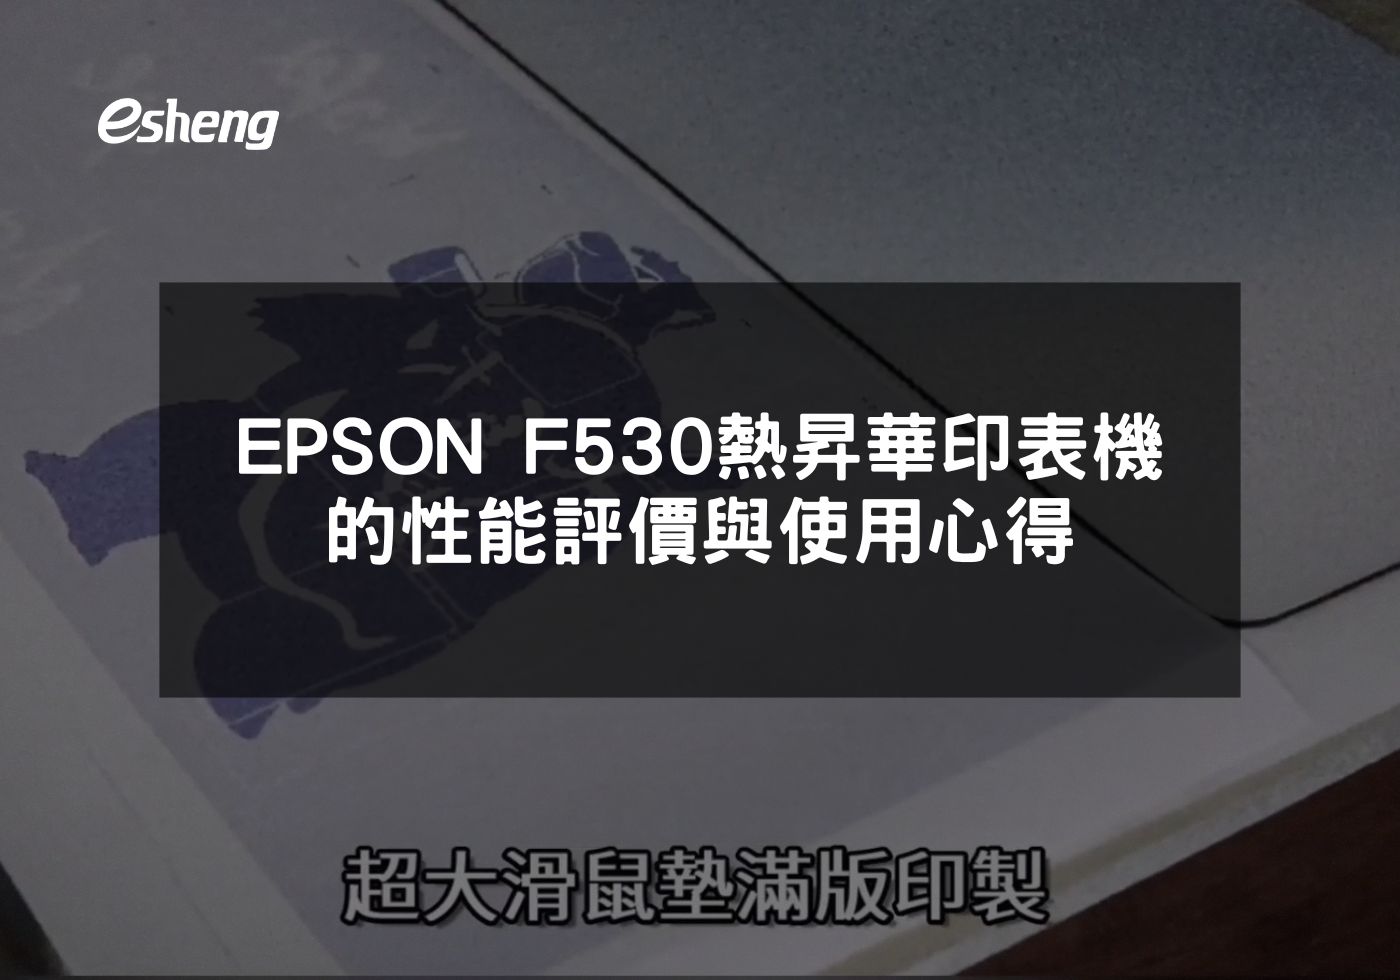 EPSON F530熱昇華印表機的性能評價與使用心得